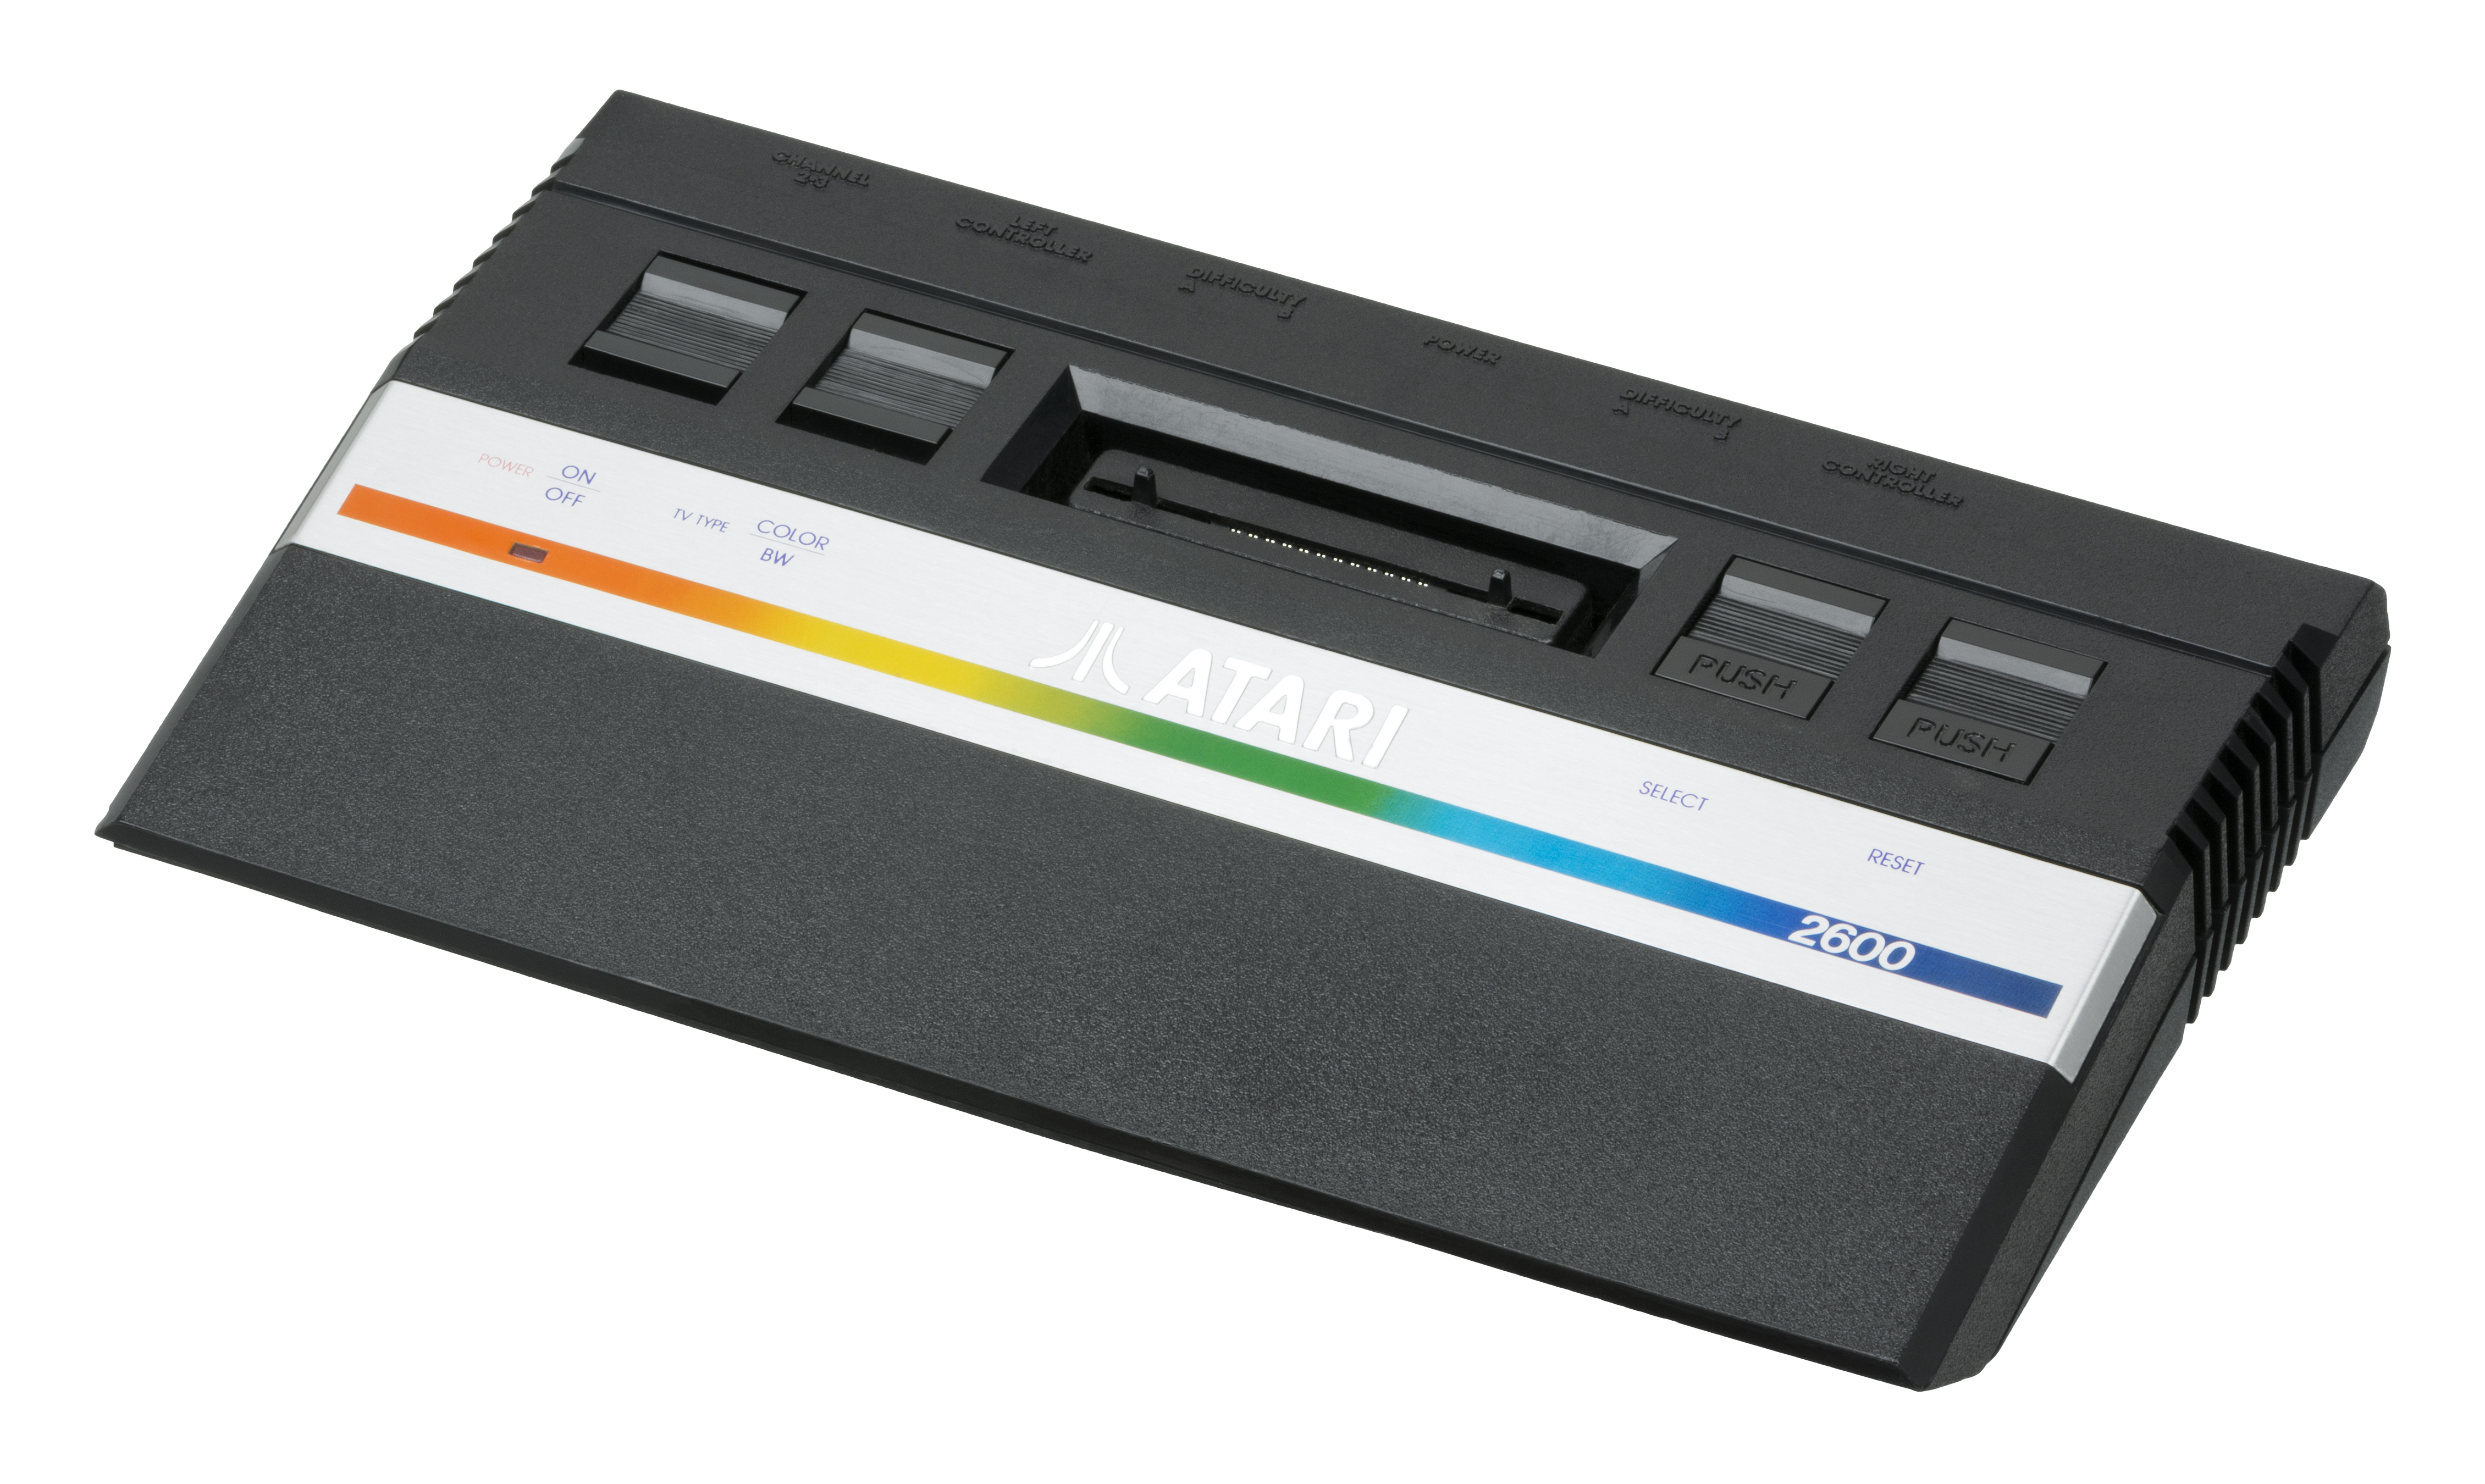 File:Atari-2600-Jr-Console-01.jpg - Wikipedia